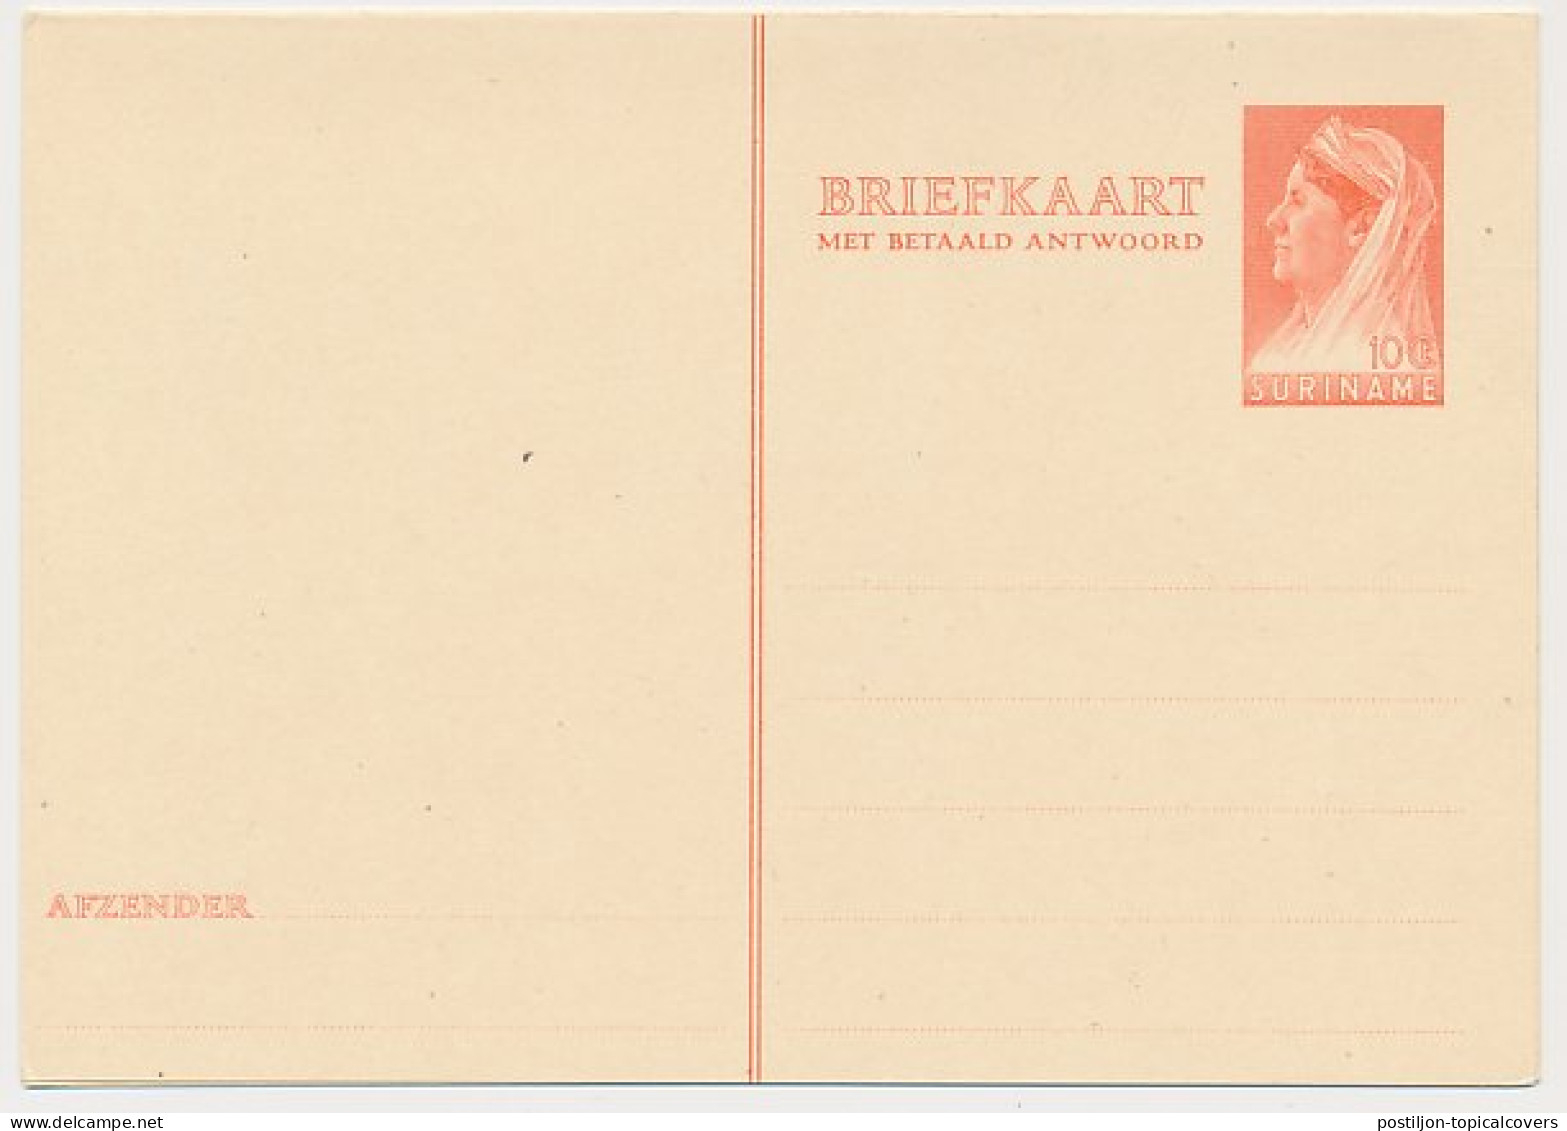 Suriname Briefkaart G. 41 - Surinam ... - 1975